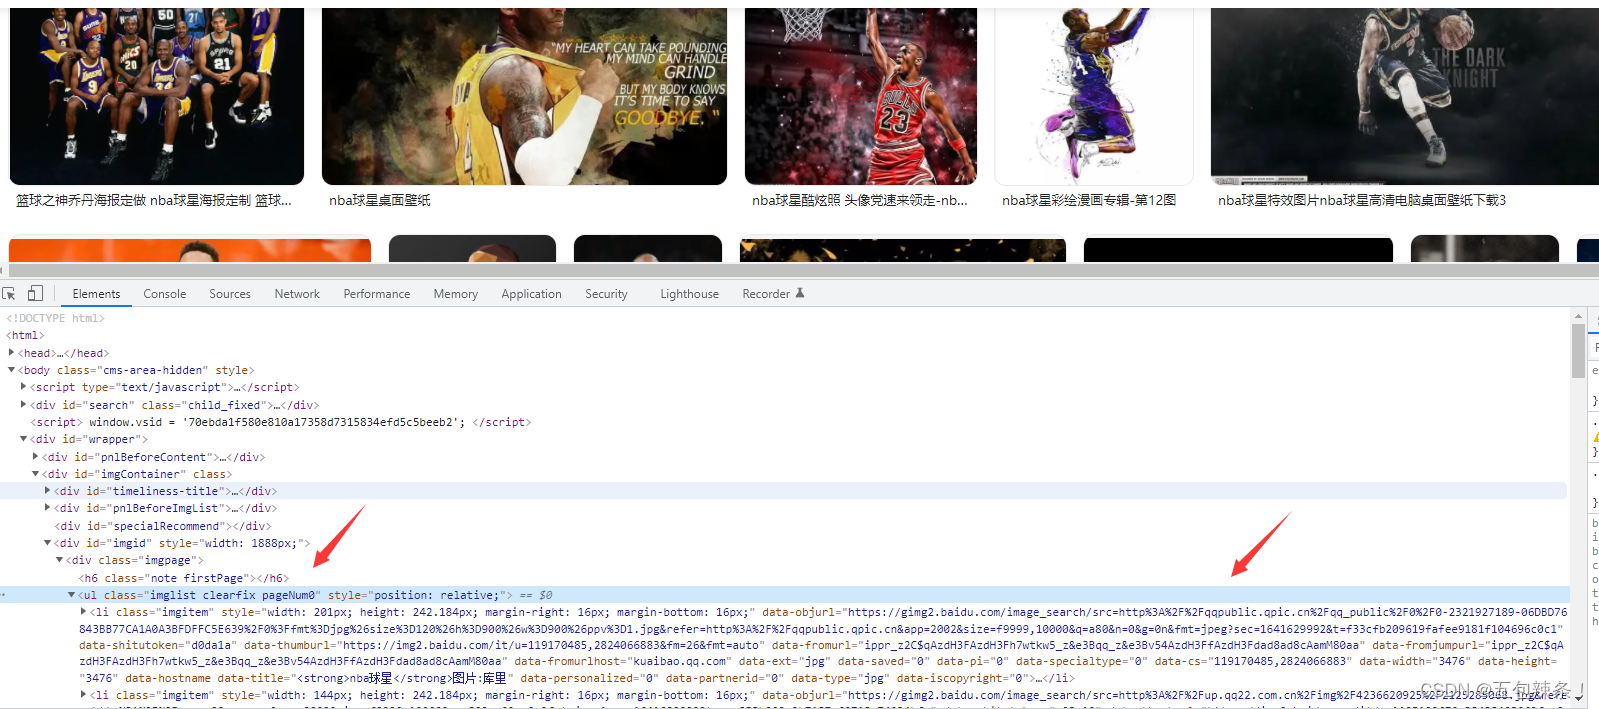 nba的素材可以去哪些平台找(朋友很喜欢打篮球，我用Python爬取了1000张他喜欢的NBA球星图片)